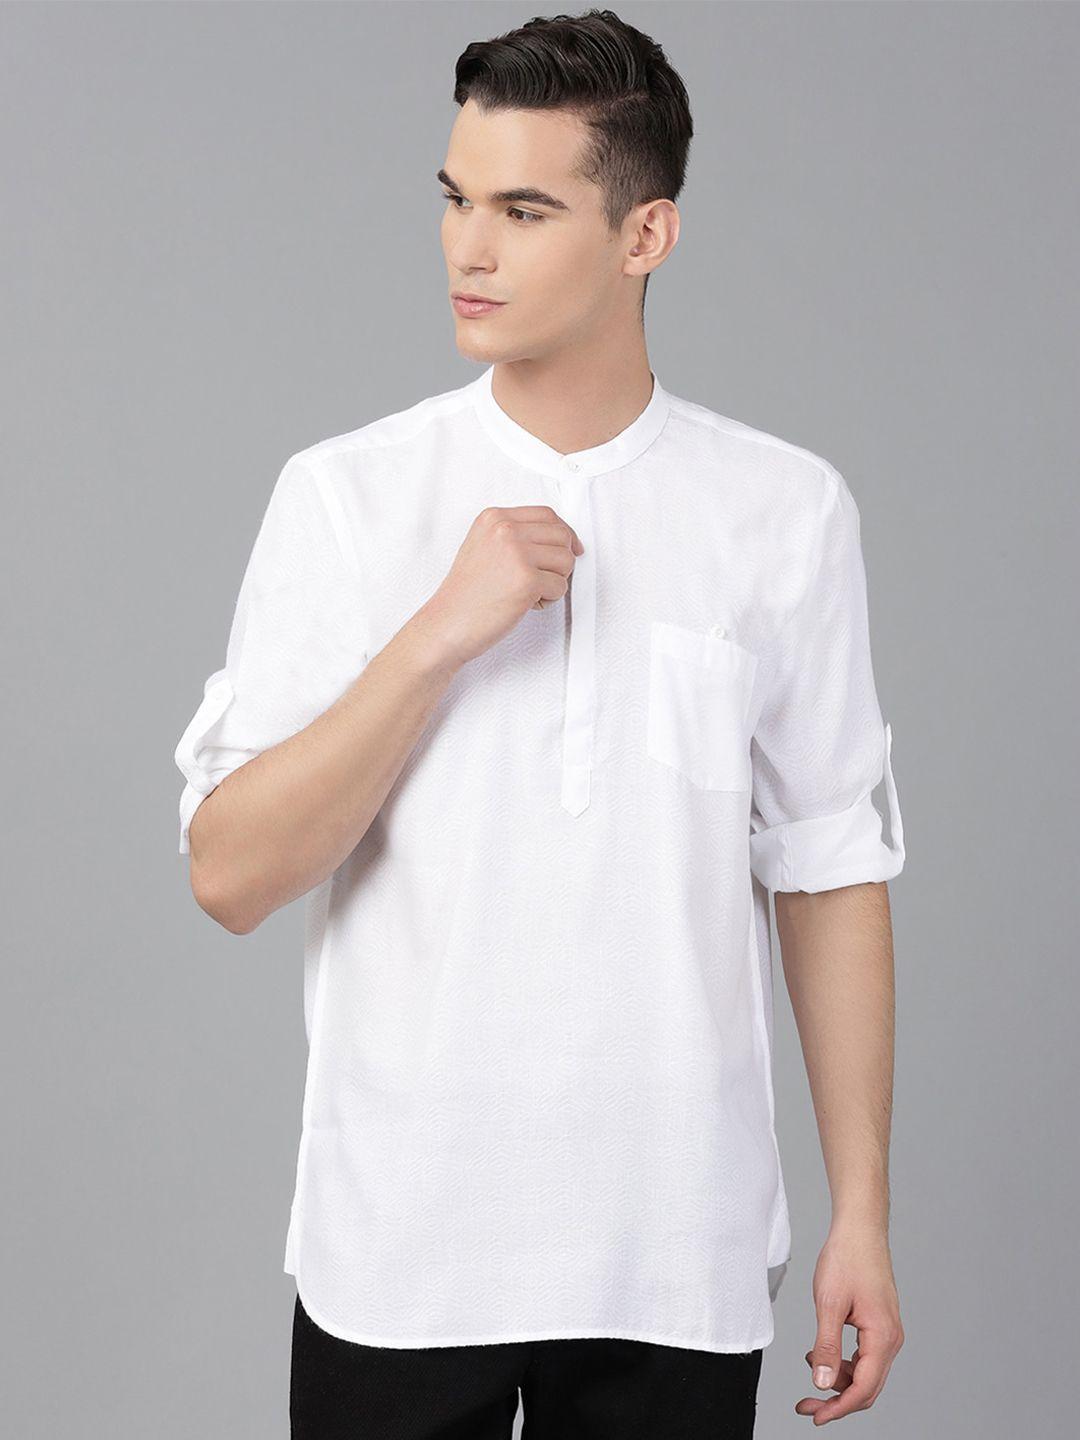 richlook men white slim fit casual shirt